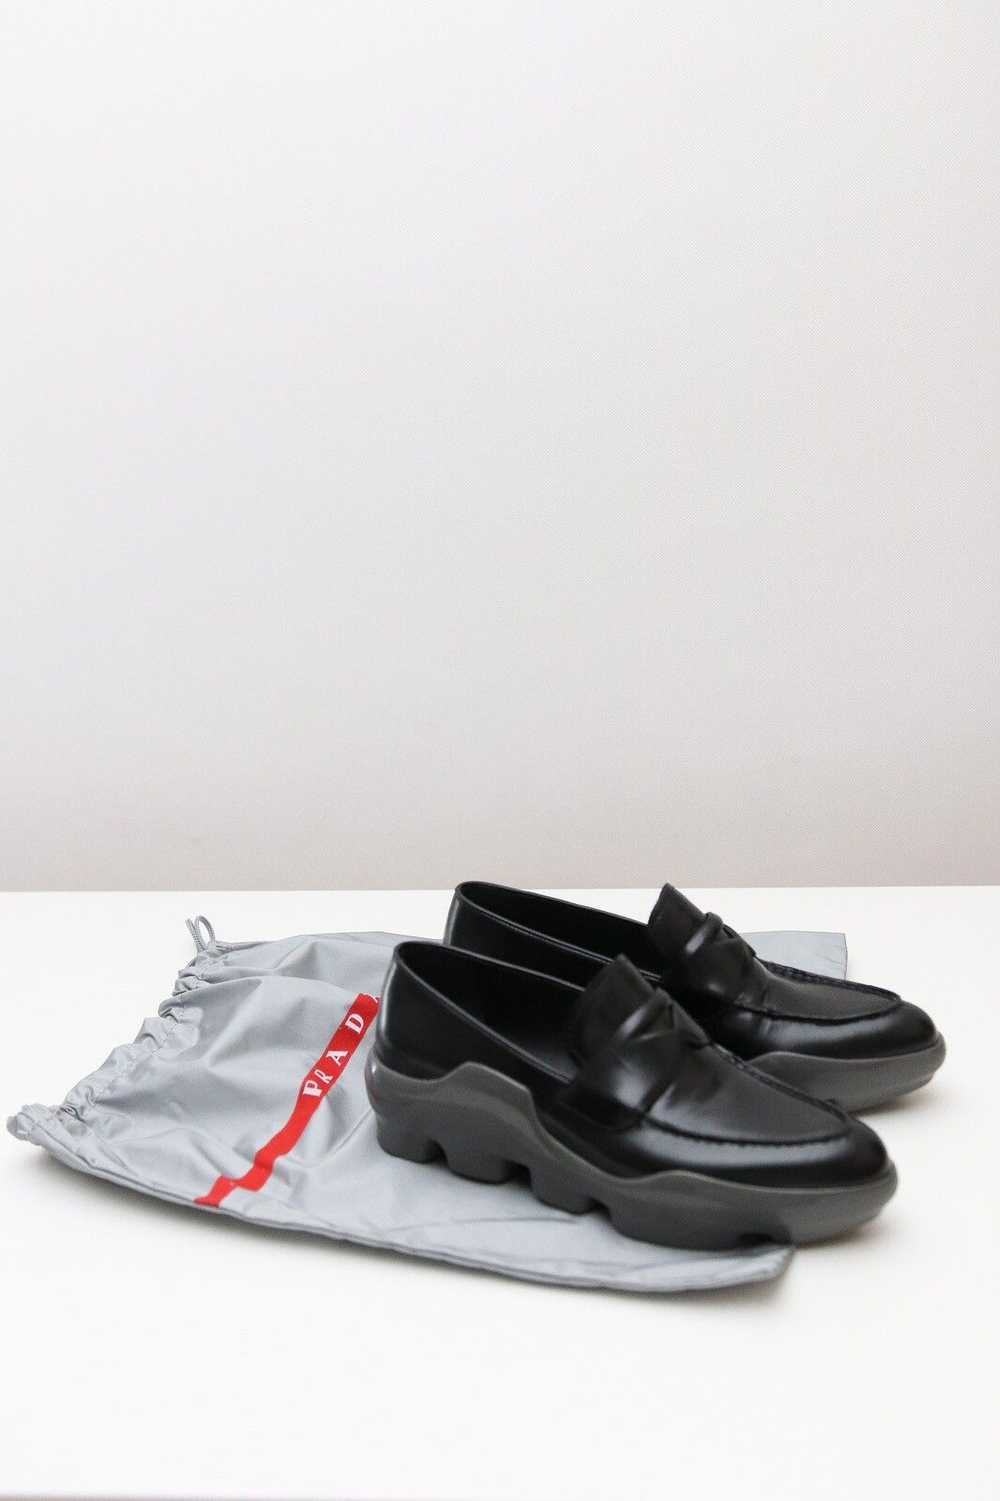 Prada Prada Penny Loafers Platforms Leather - image 1